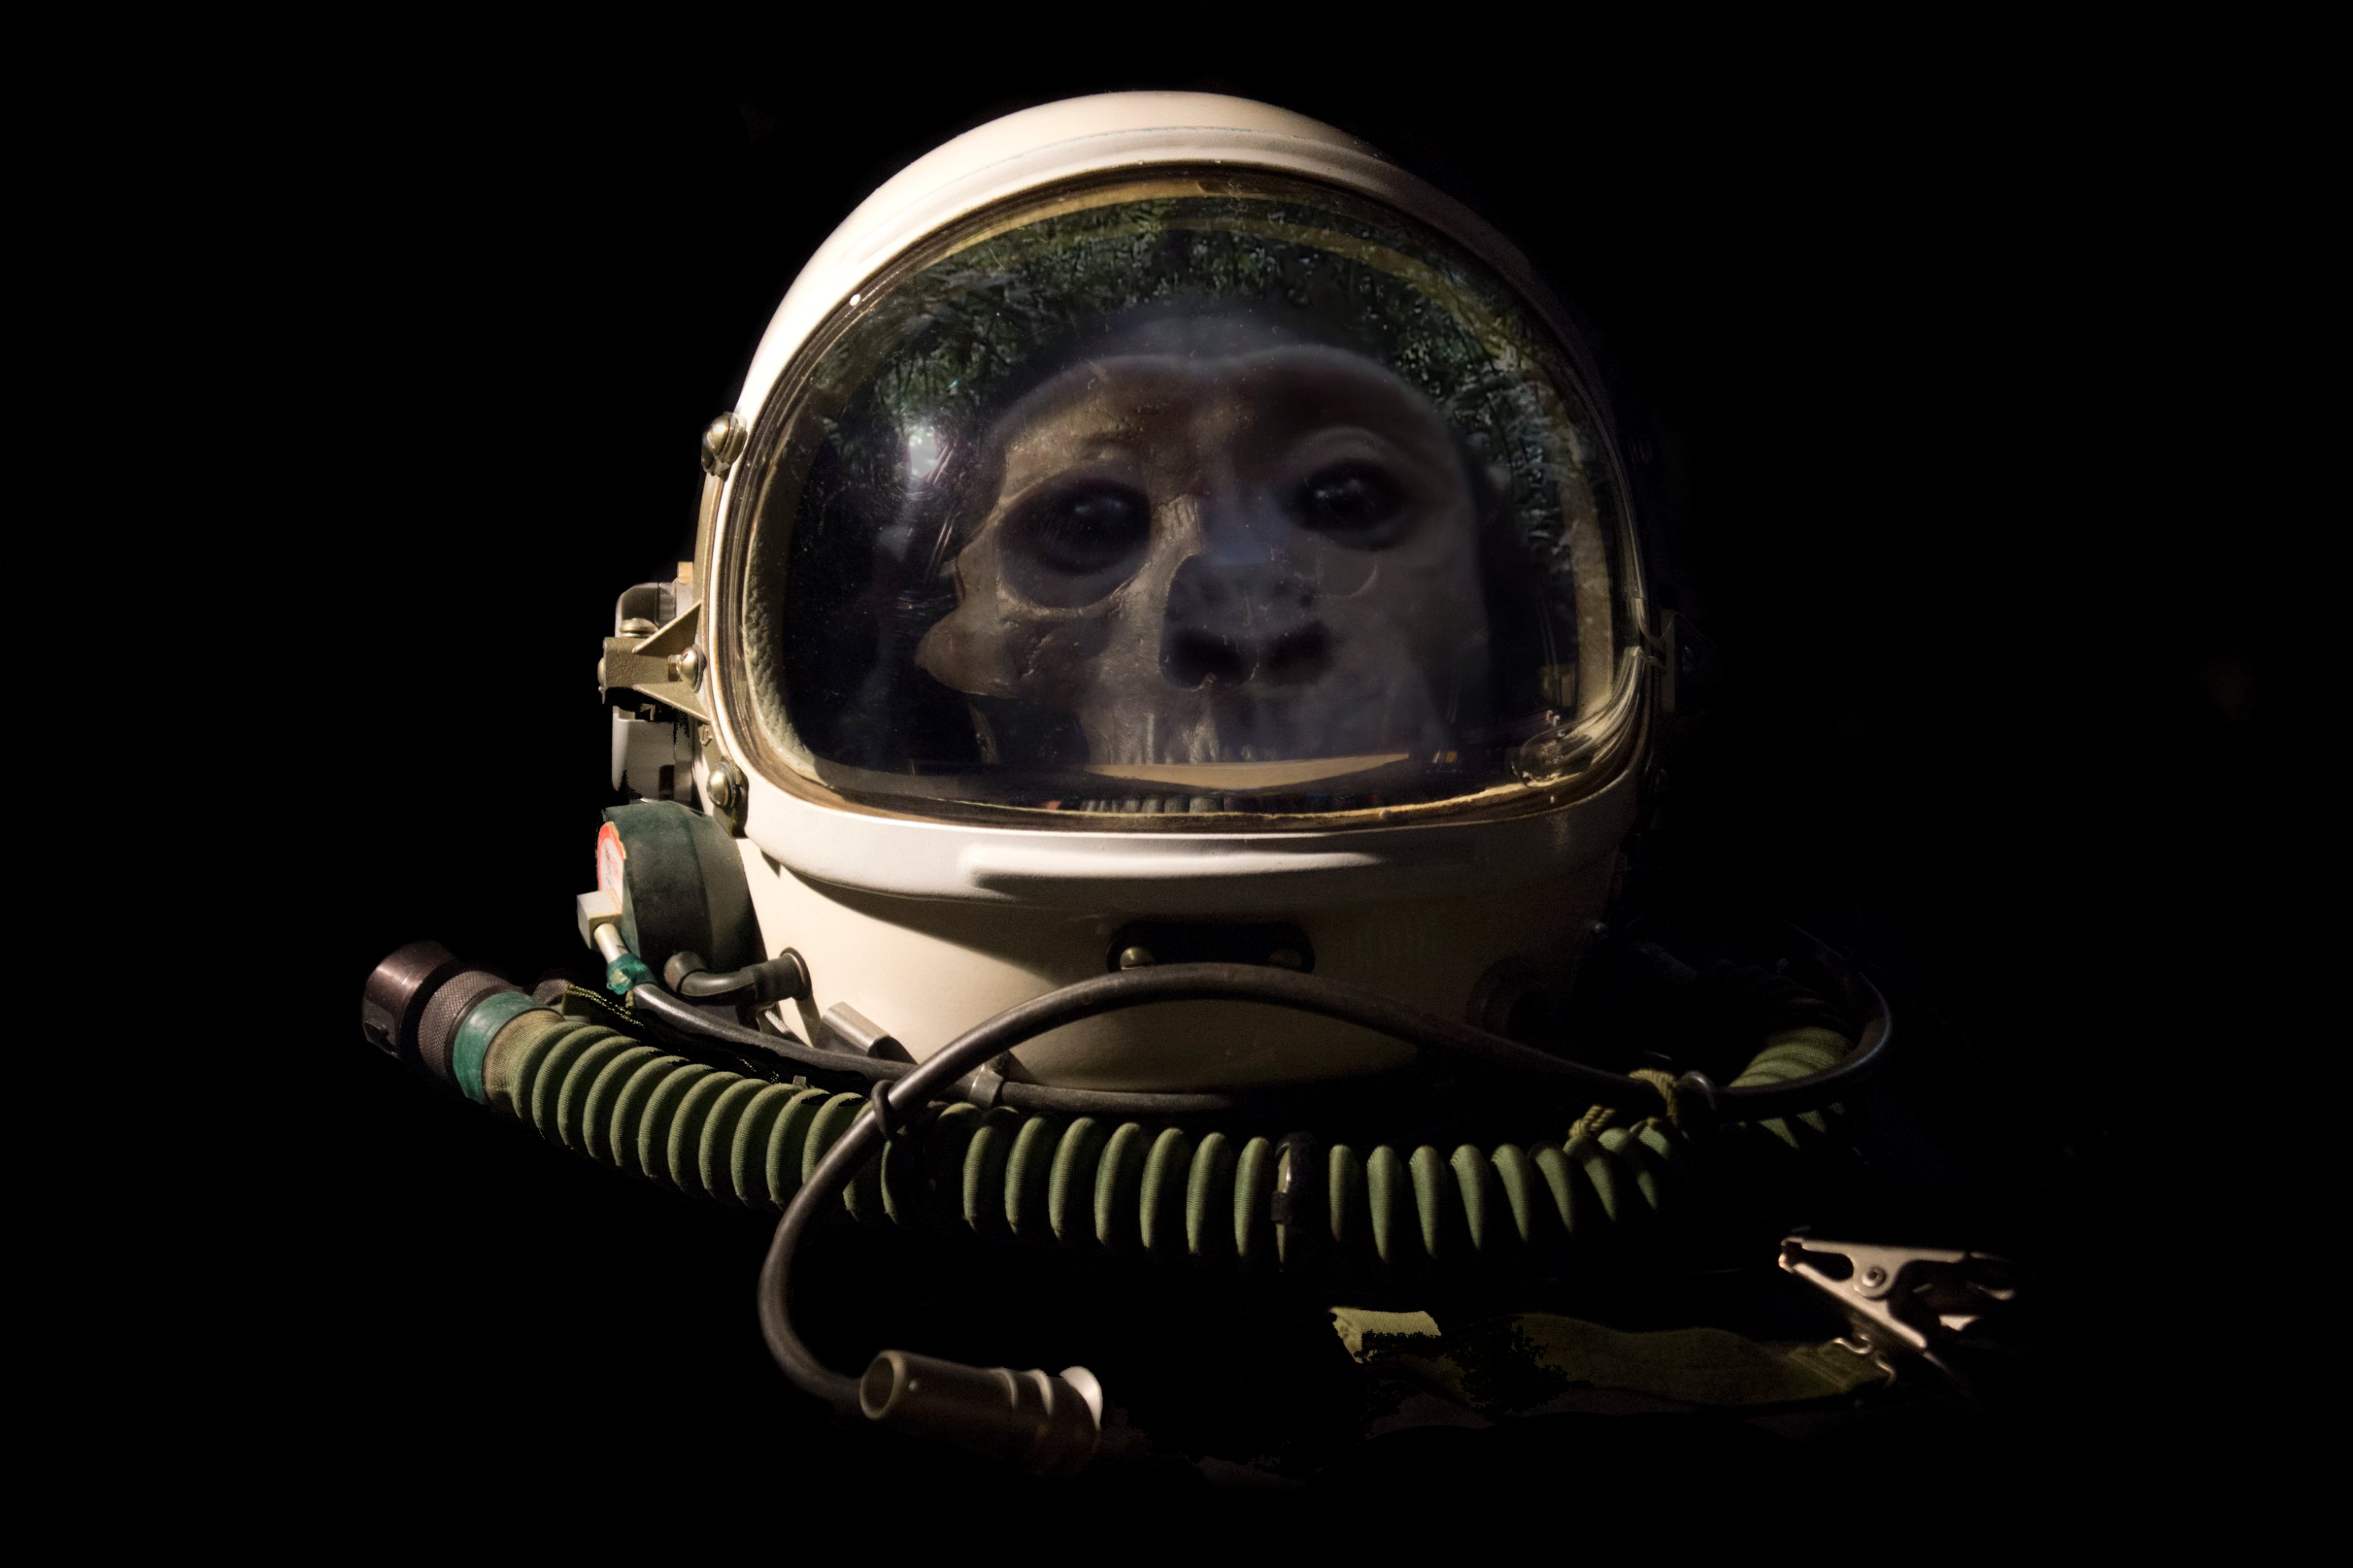 General 2930x1953 black background minimalism skull helmet monkey astronaut digital art simple background